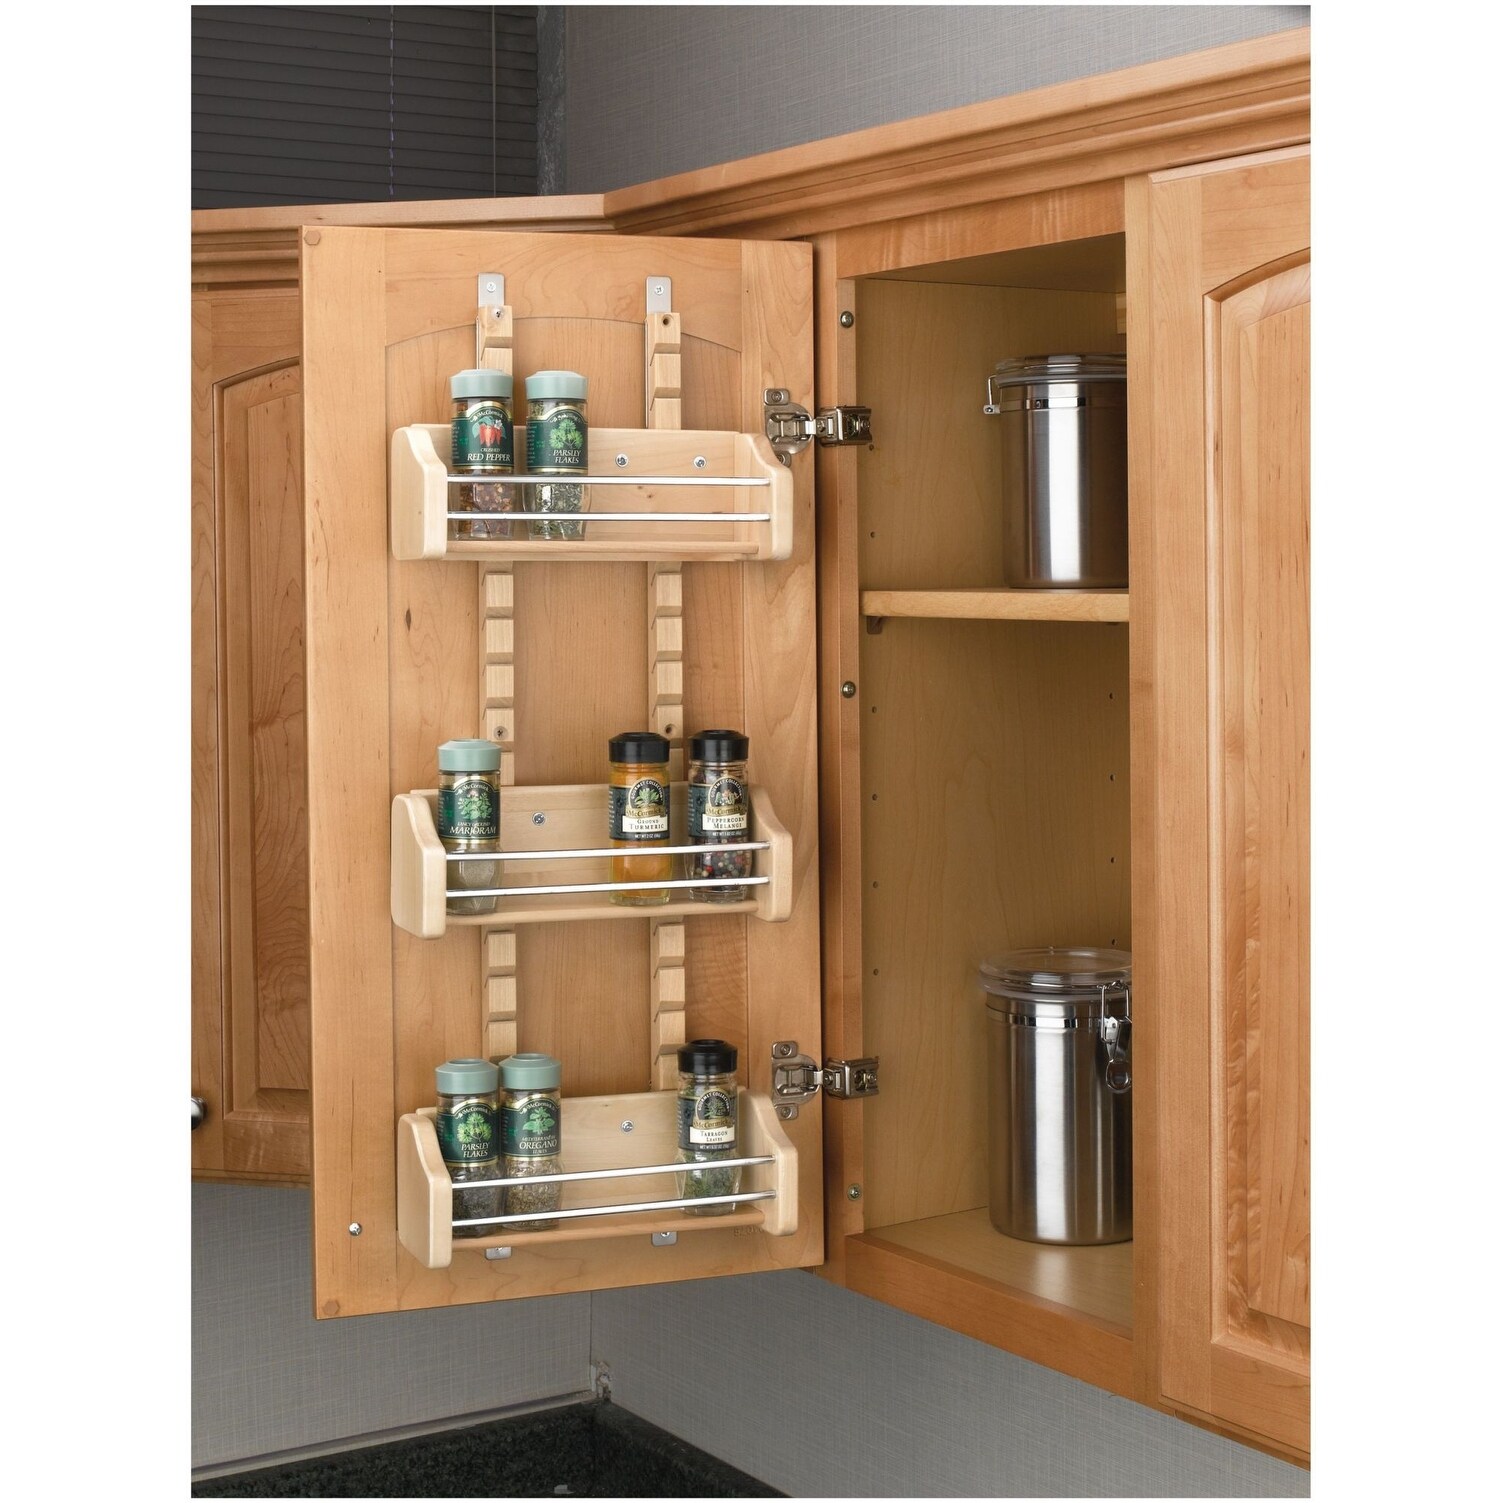 Rev-A-Shelf 4ASR Series Door Mount Spice Rack with Adjustable Shelves